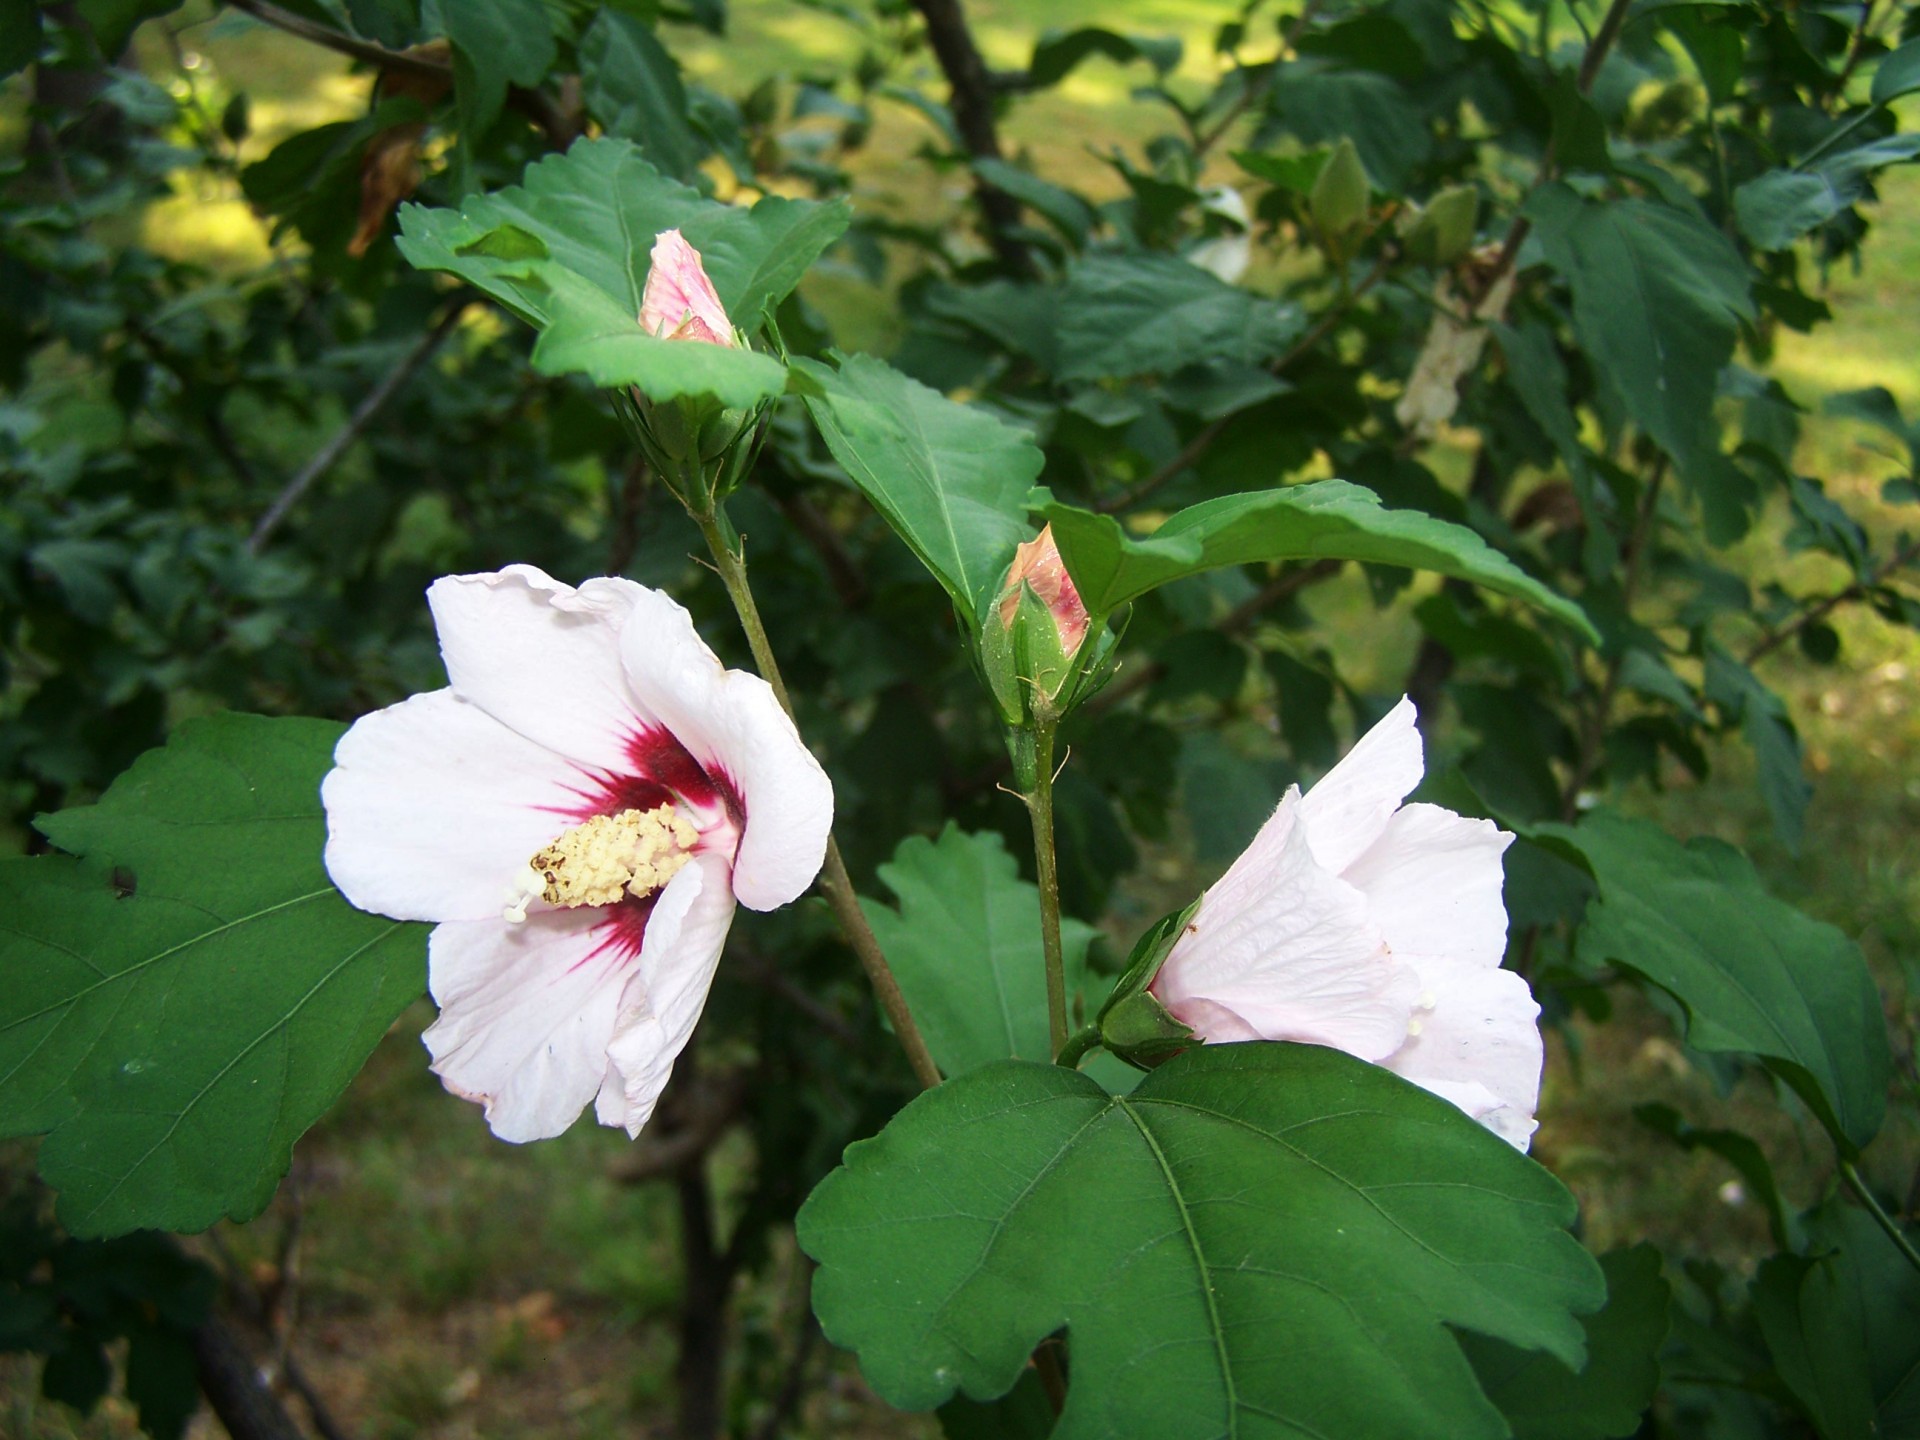 Fleurs d'hibiscus